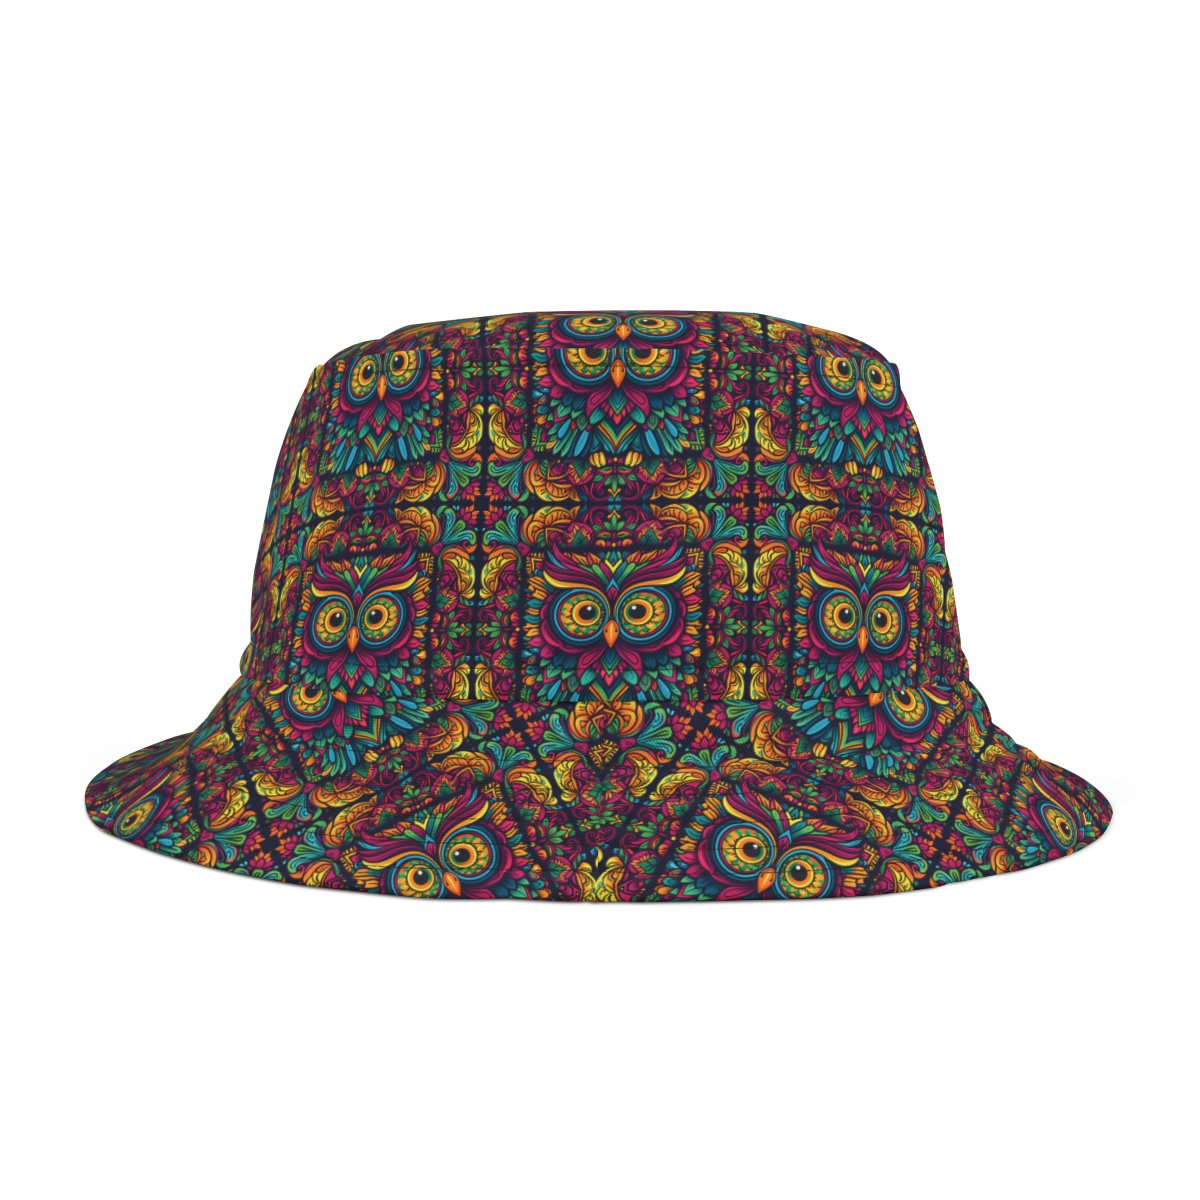 Colorful Owl Mandala Pattern - Multi Colors on Black - Biker Bucket Hat